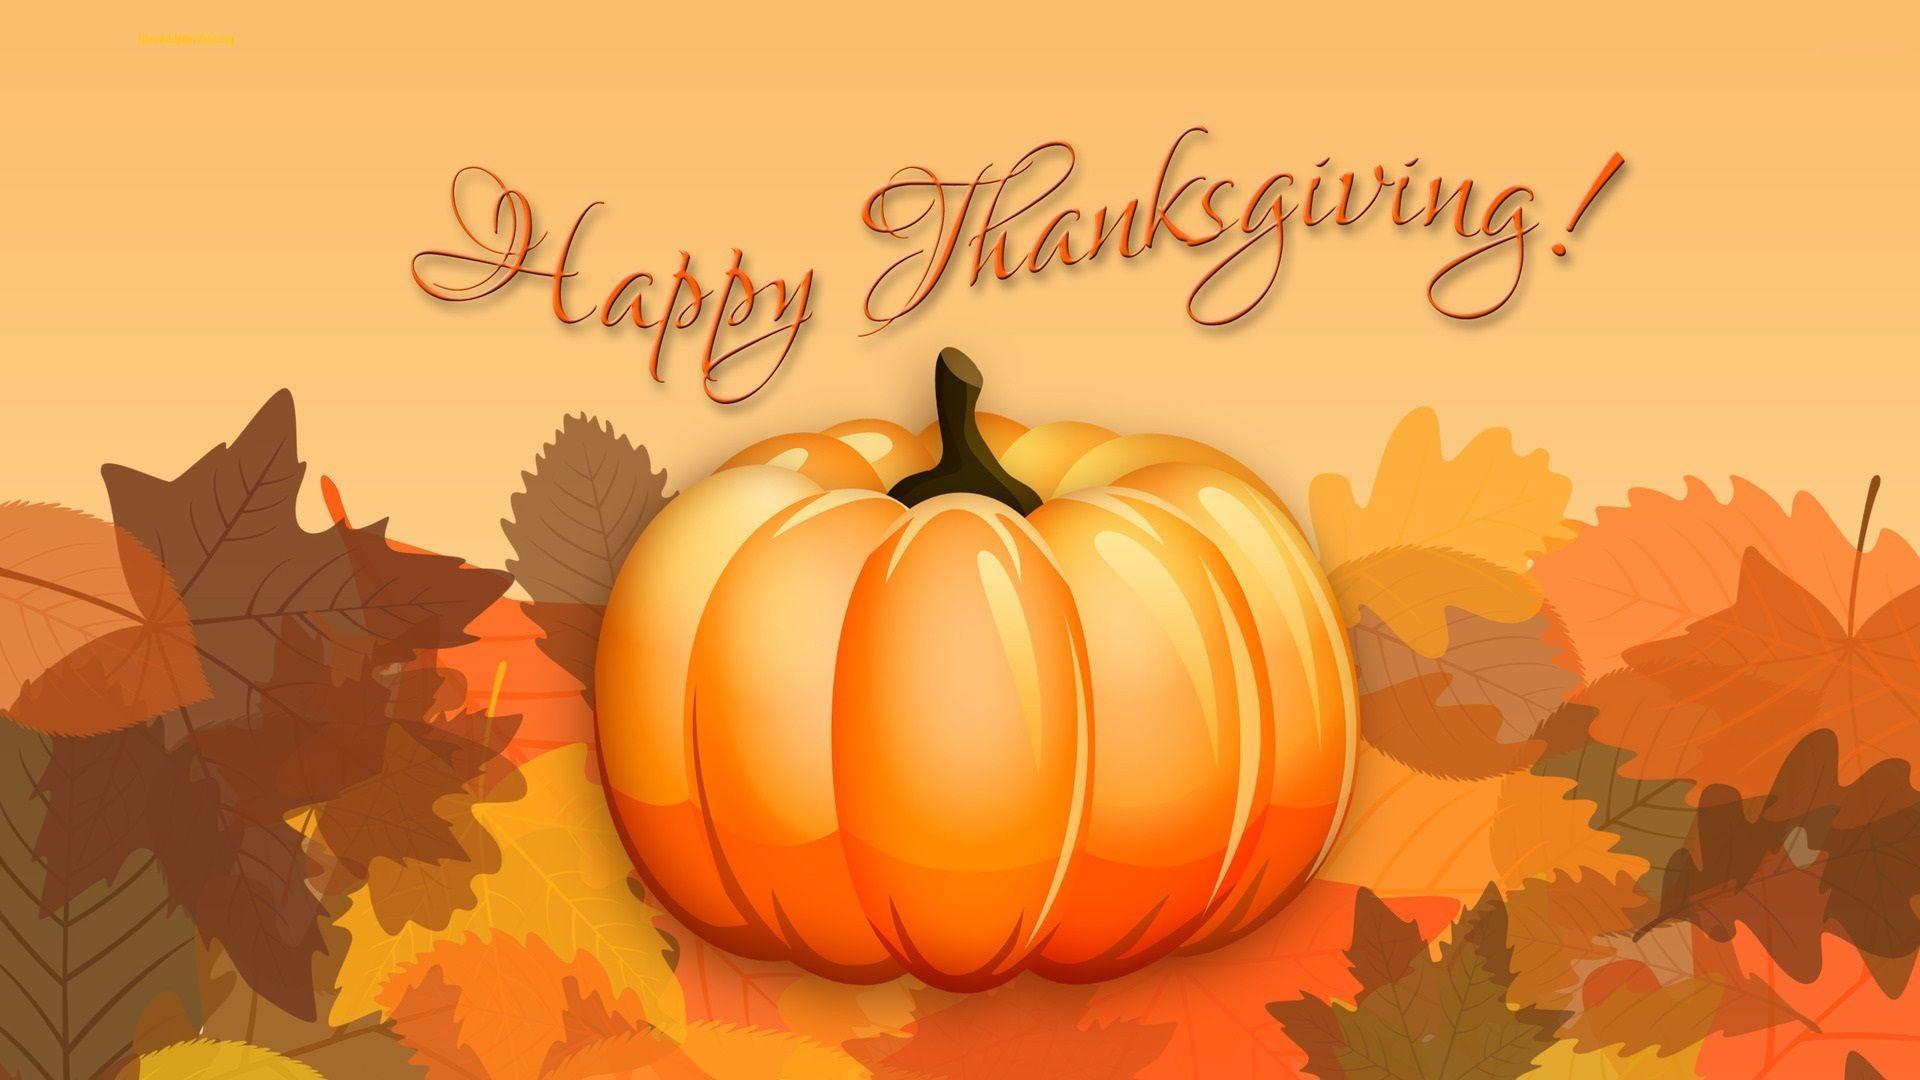 Happy Thanksgiving Live Desktop Wallpapers Free Download In HD